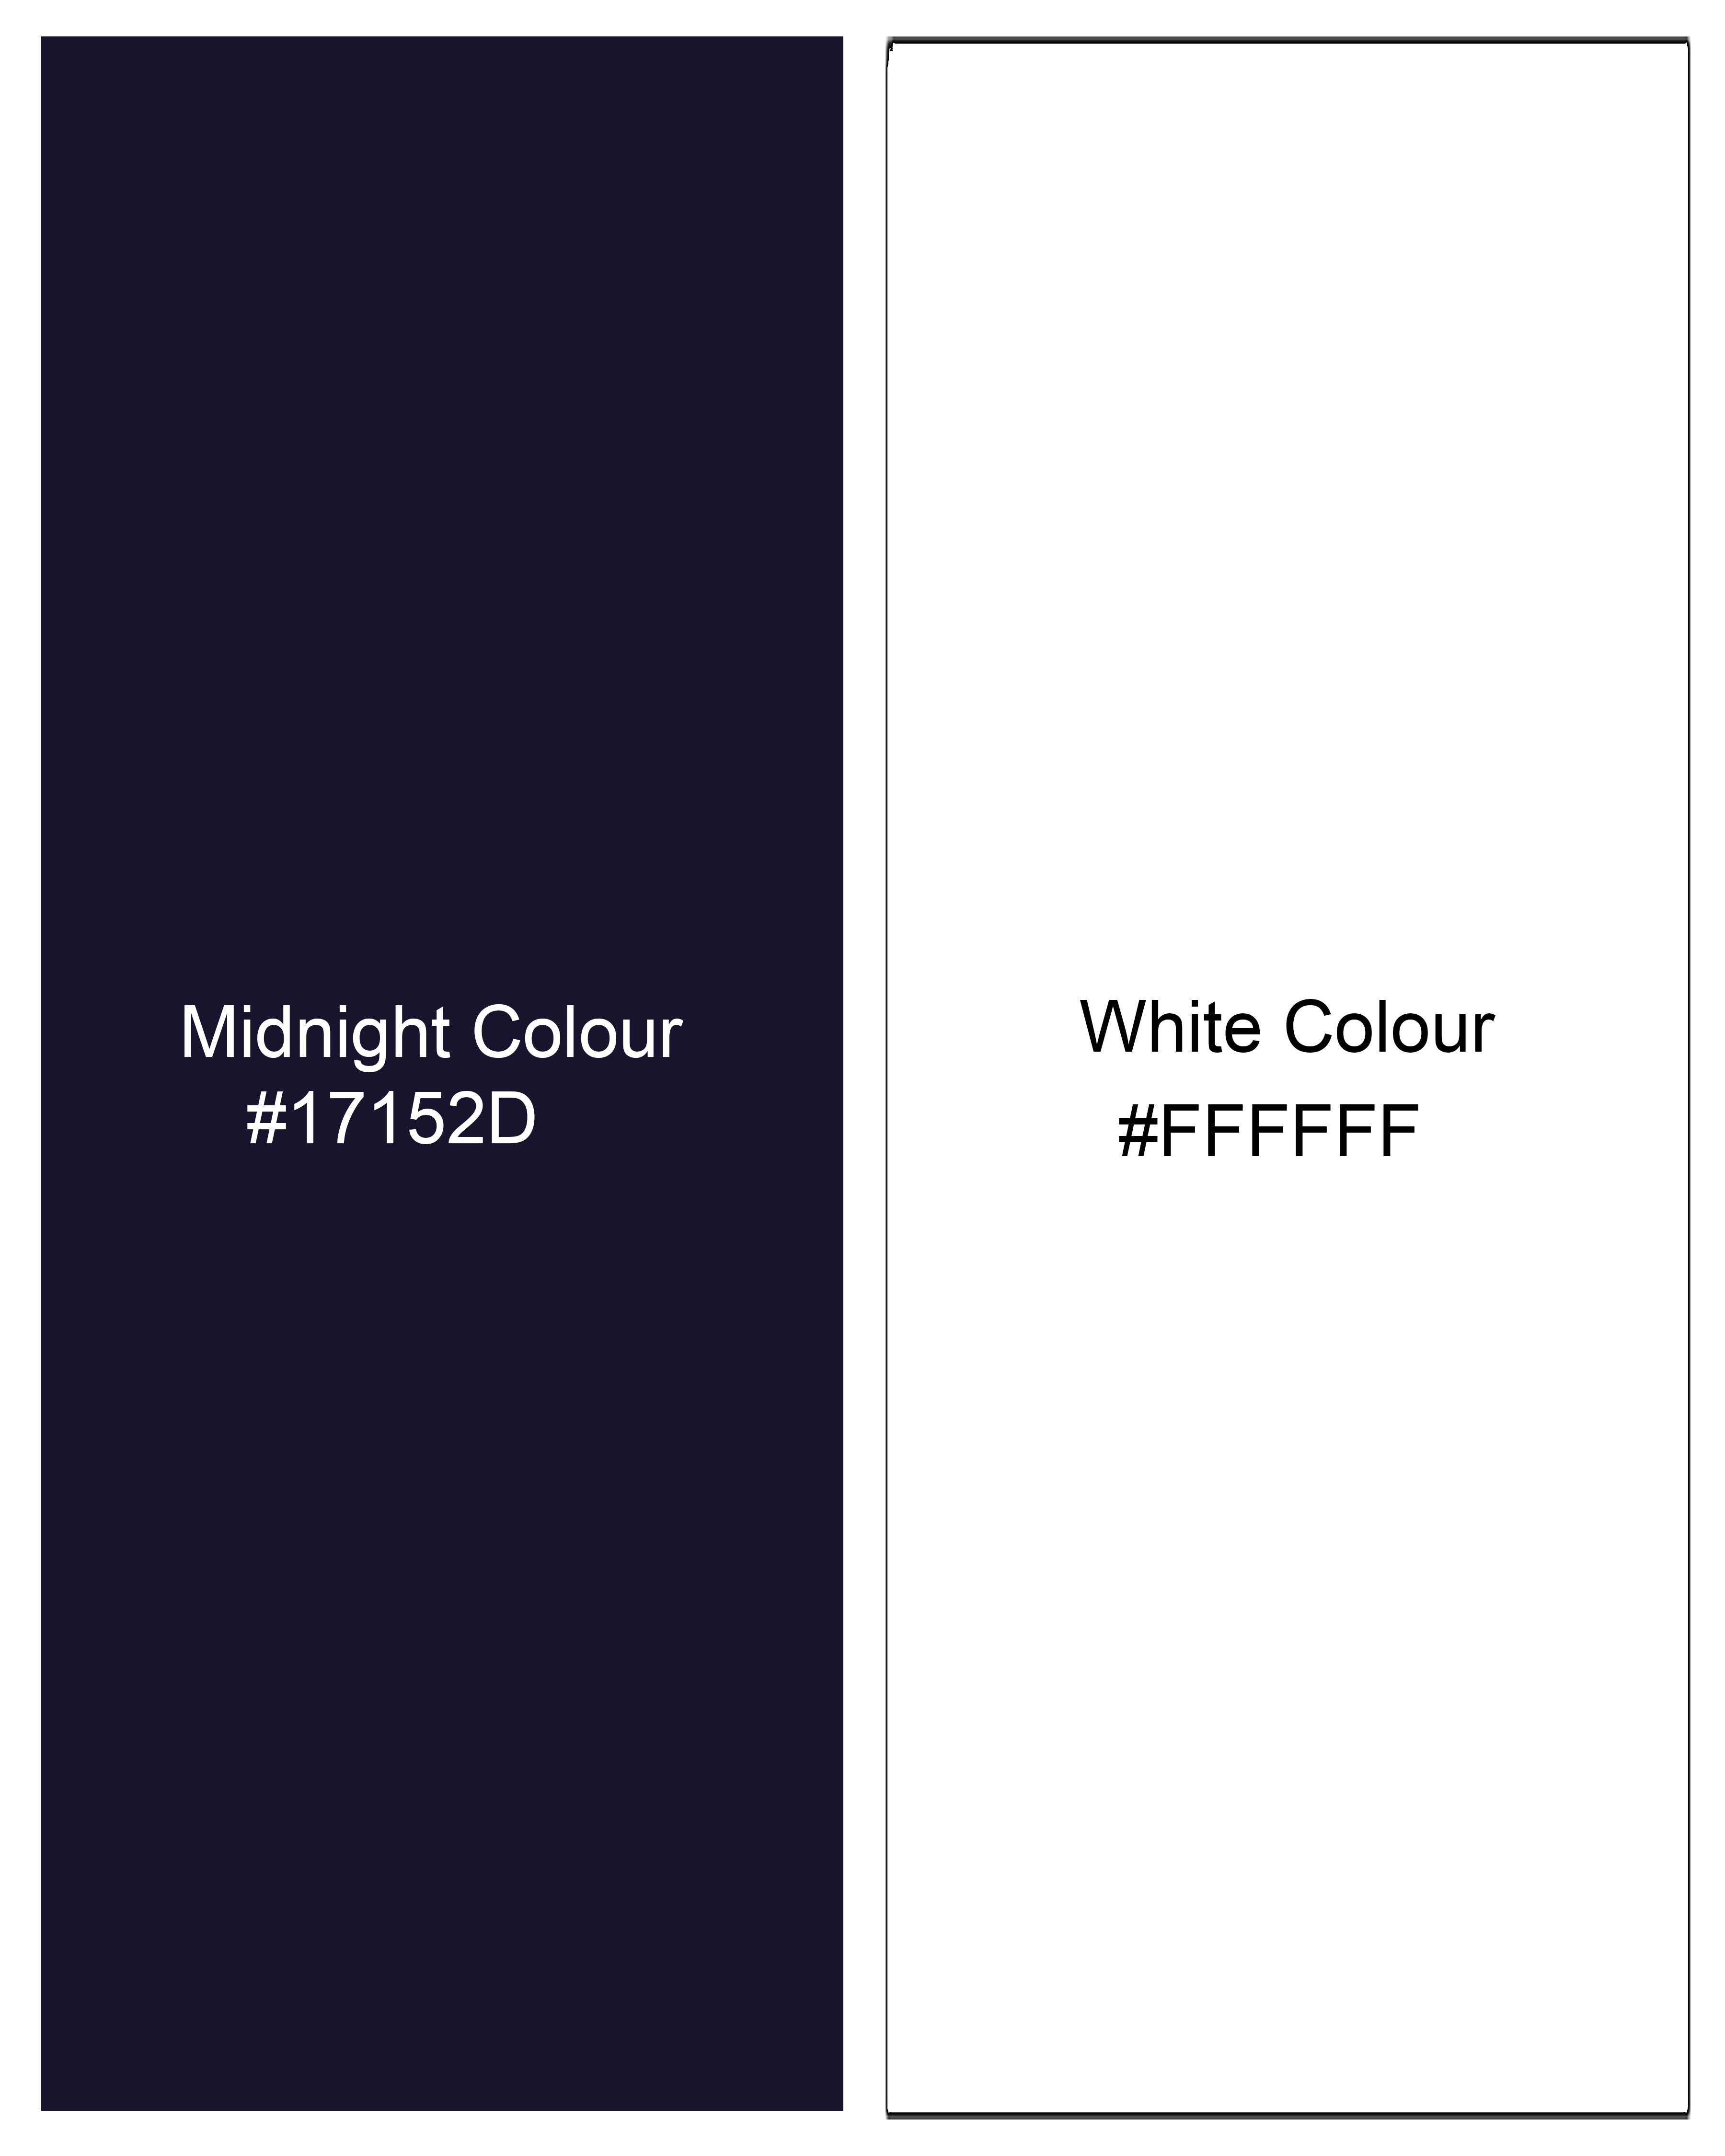 Midnight Blue and White Gingham Herringbone Shirt  8603-38,8603-H-38,8603-39,8603-H-39,8603-40,8603-H-40,8603-42,8603-H-42,8603-44,8603-H-44,8603-46,8603-H-46,8603-48,8603-H-48,8603-50,8603-H-50,8603-52,8603-H-52